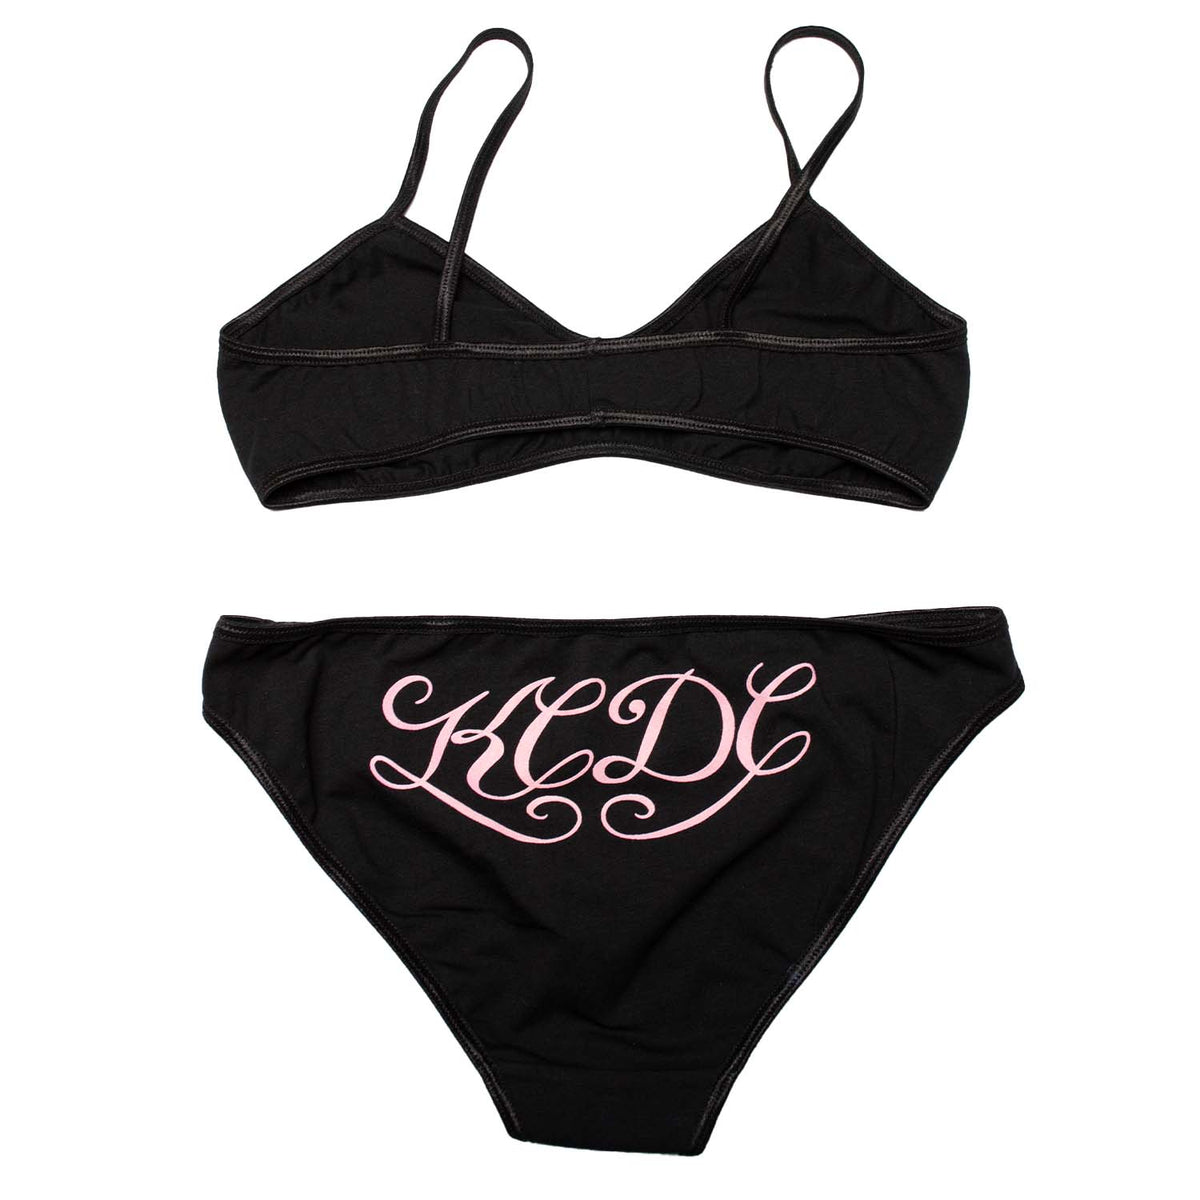 Black bikini panty with pink KCDC script printed on butt. Pair with black KCDC pink script print bralette for the full set. 